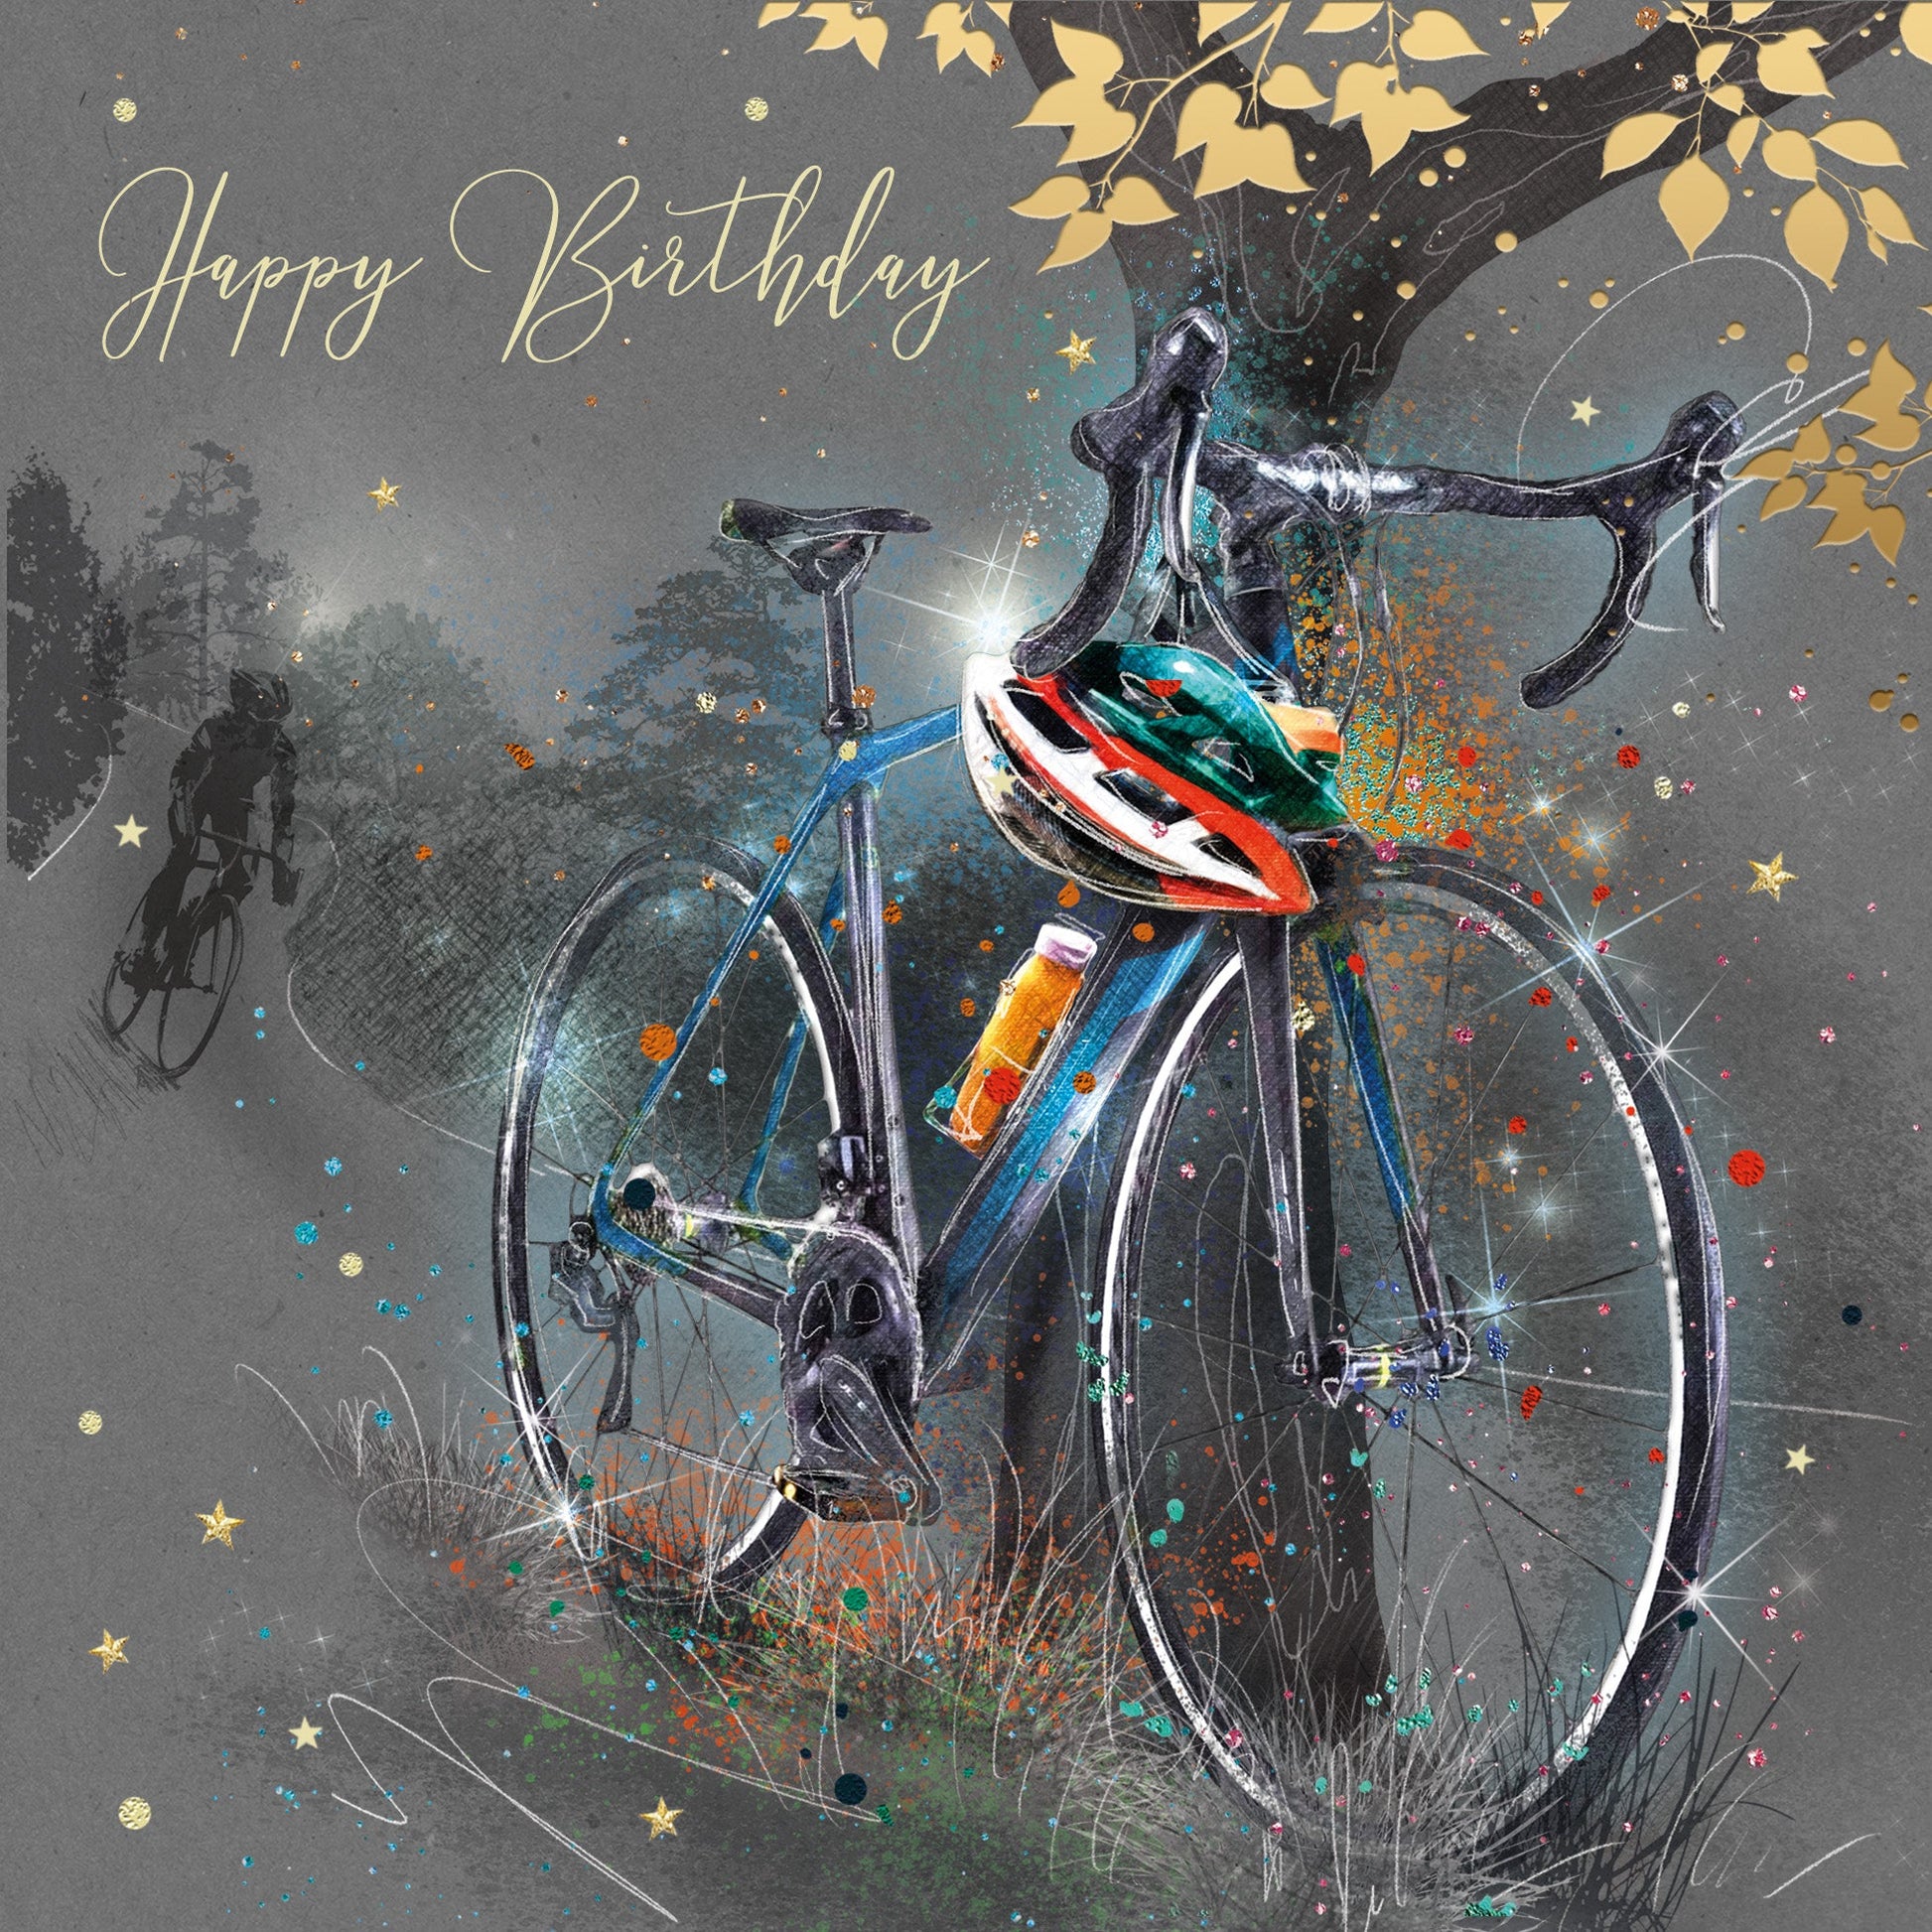 Leaning Bike Happy Birthday Greetings Card